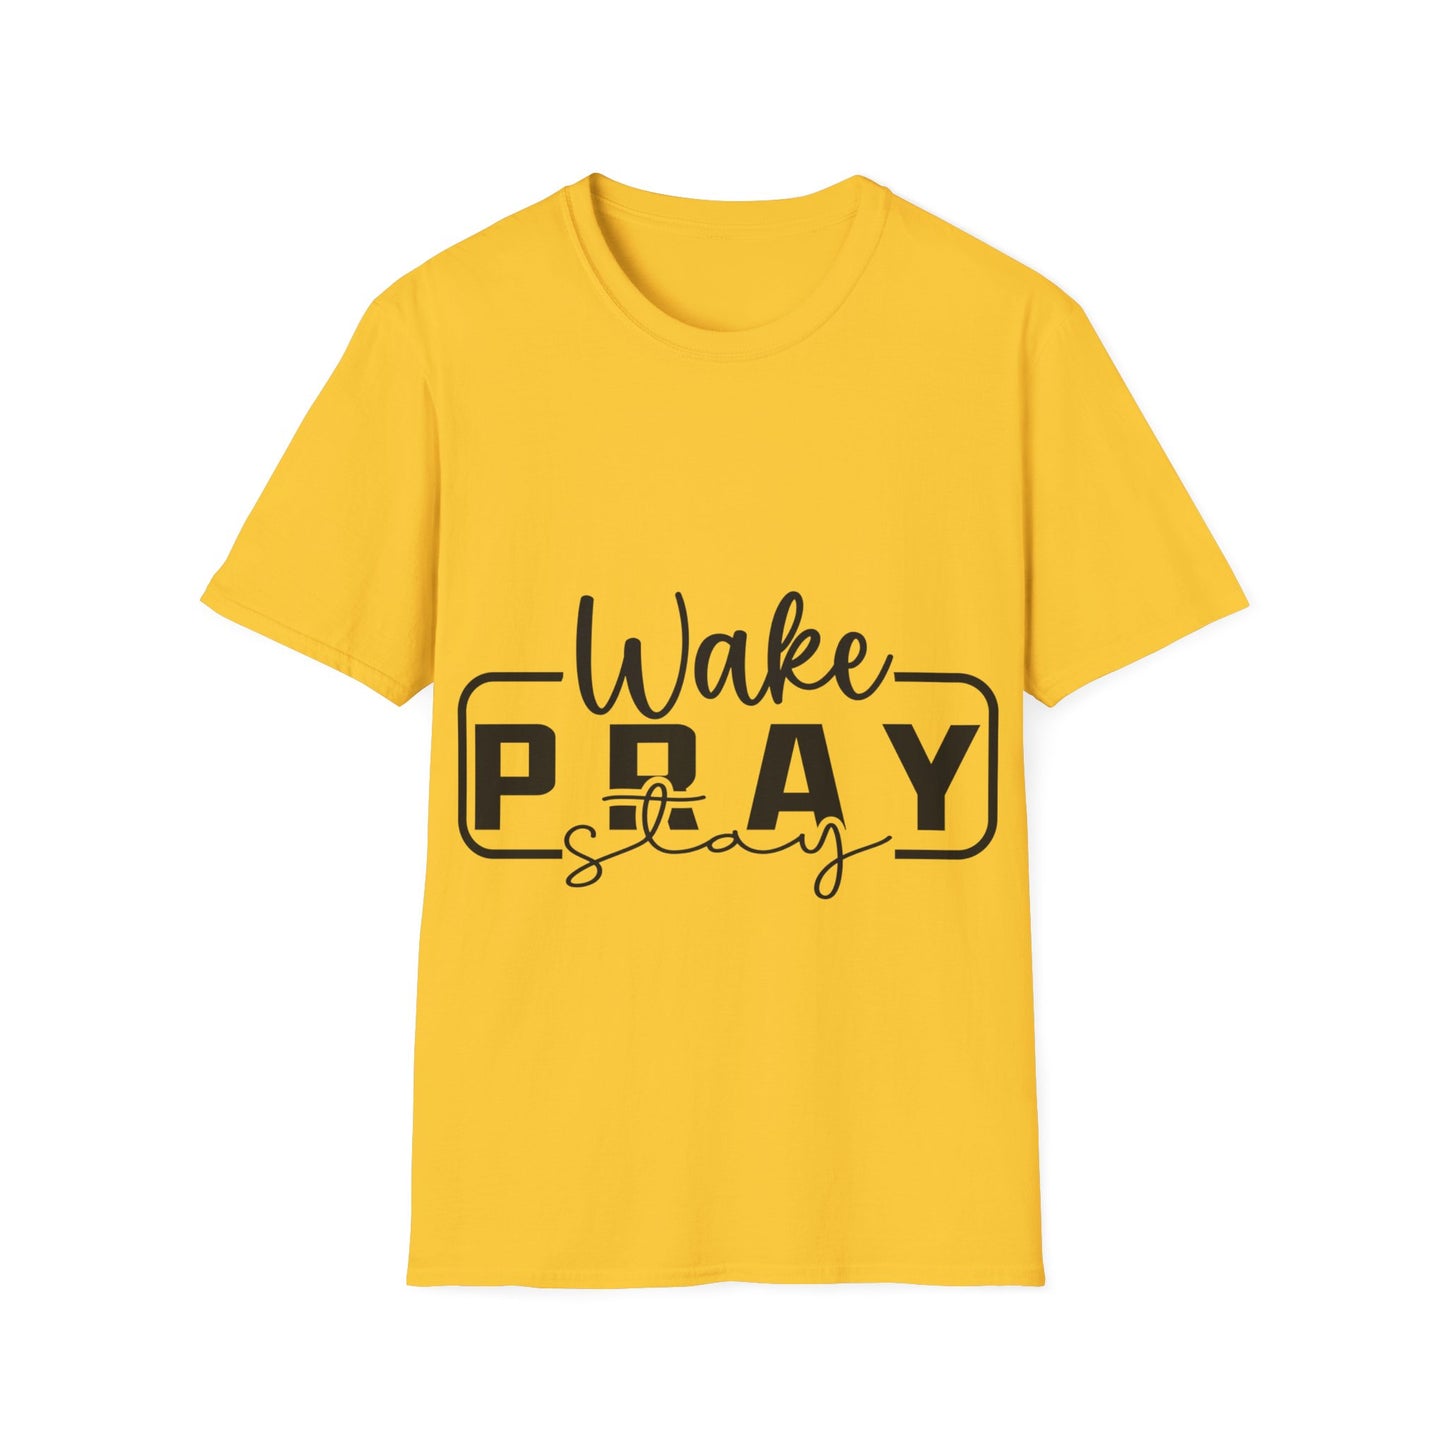 Wake Pray Stay Triple Viking T-Shirt